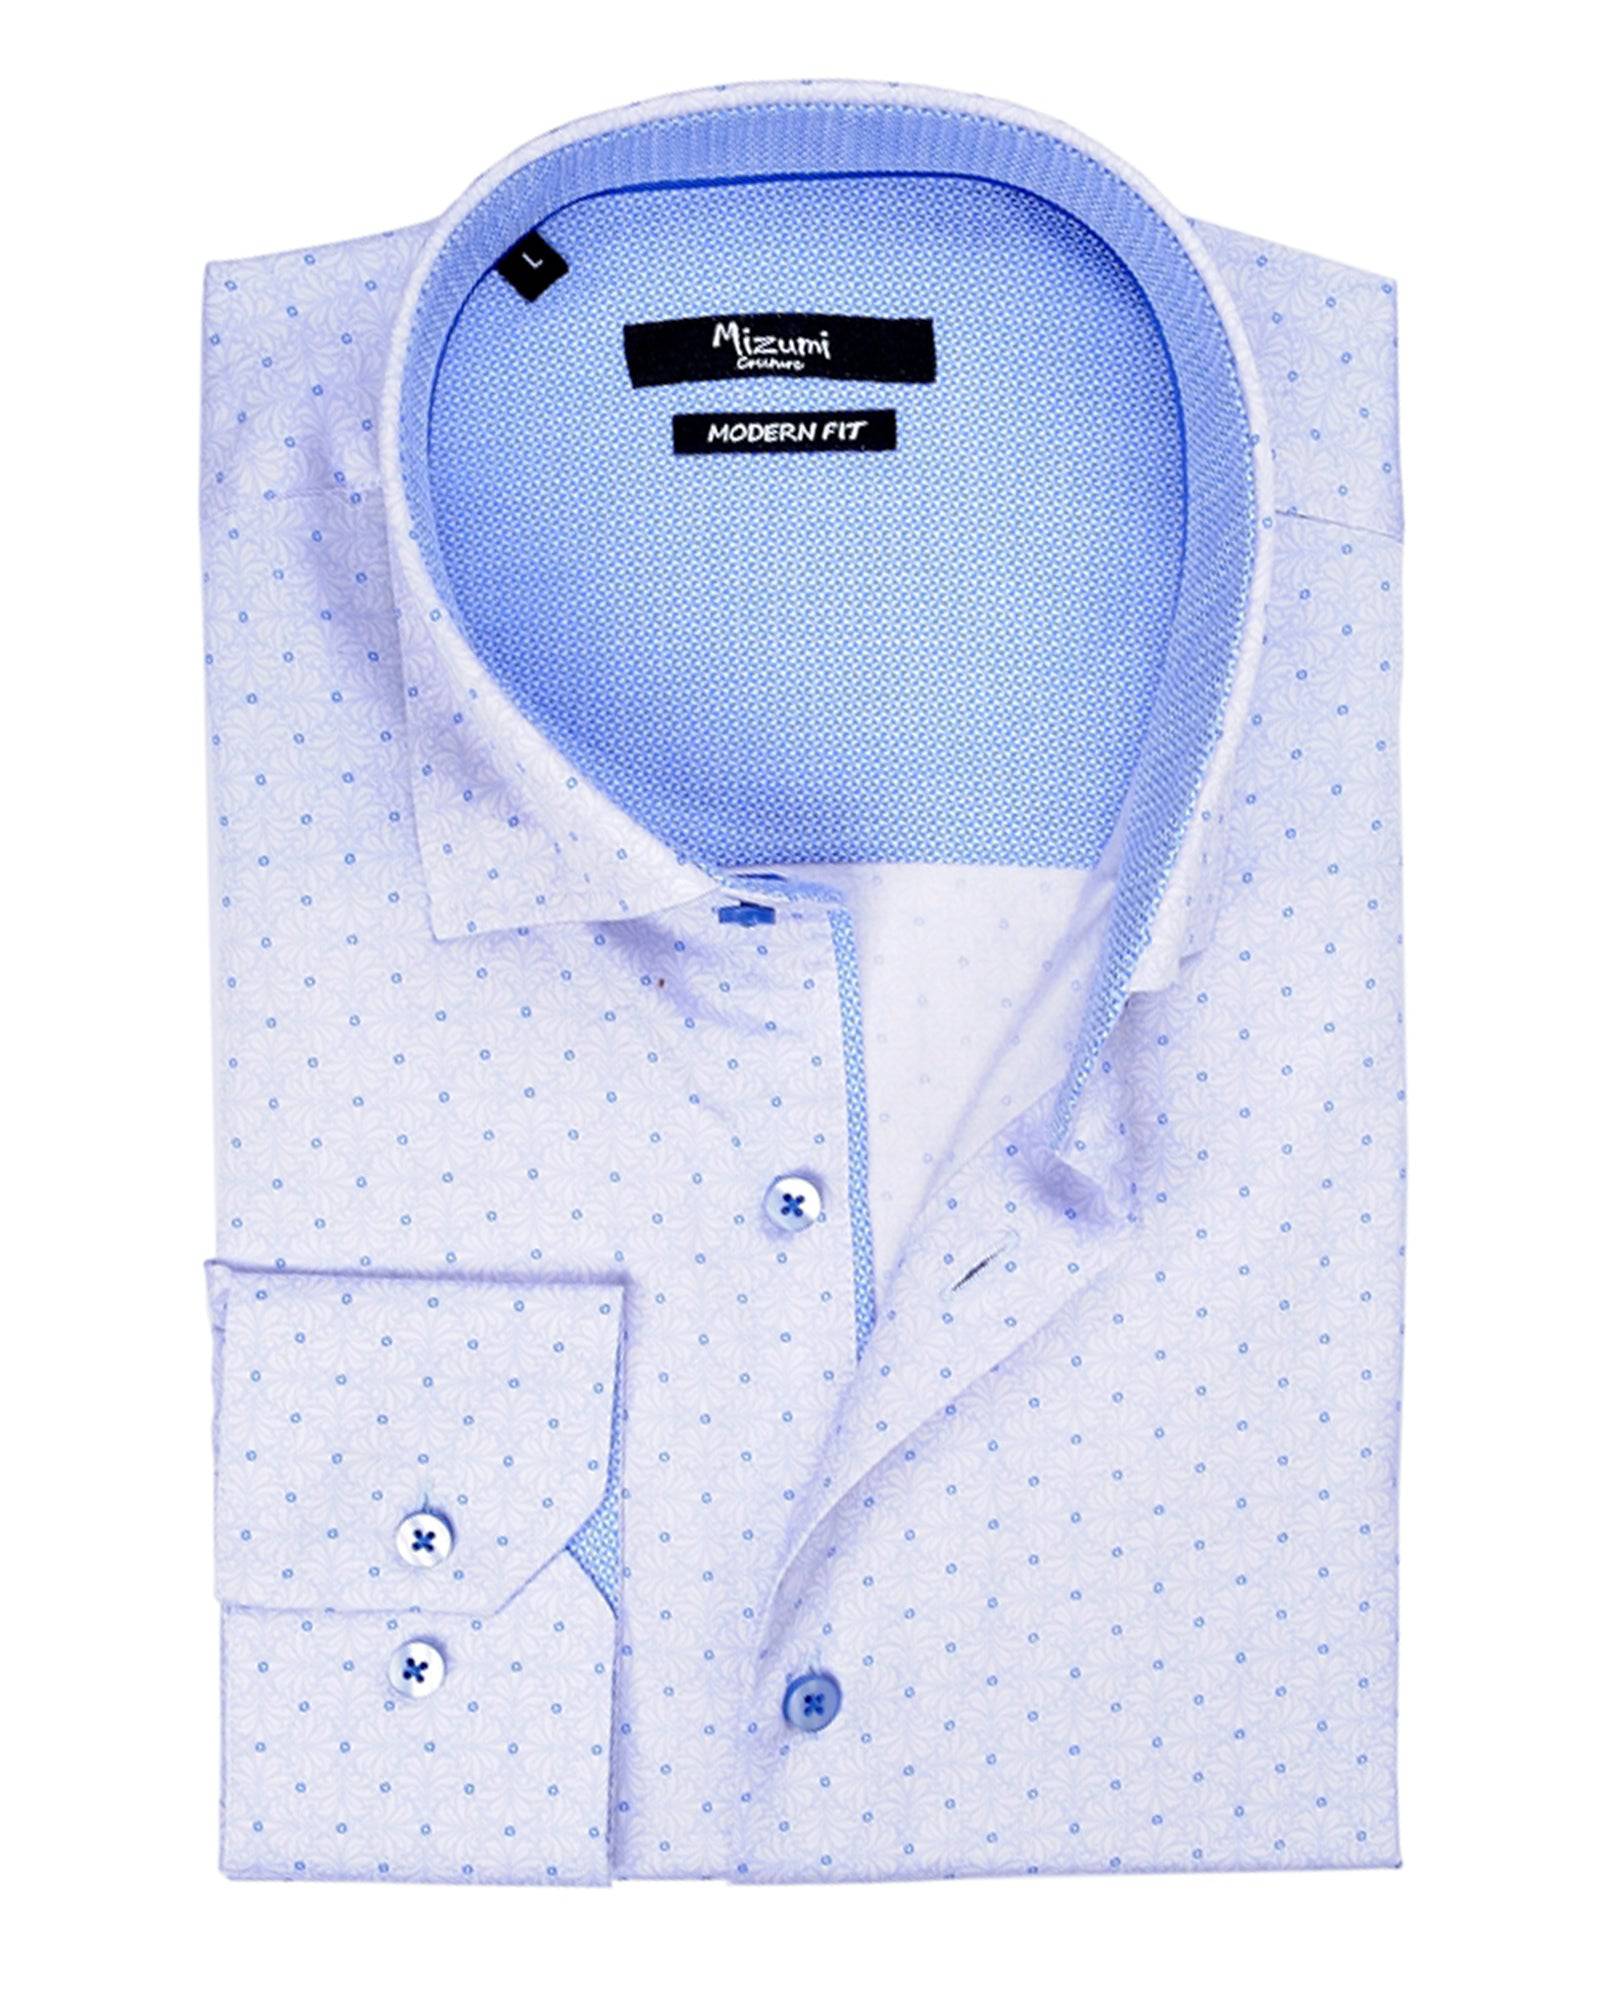 Light Blue Tiny Circle Neat Print Sport Shirt - Rainwater's Men's Clothing and Tuxedo Rental